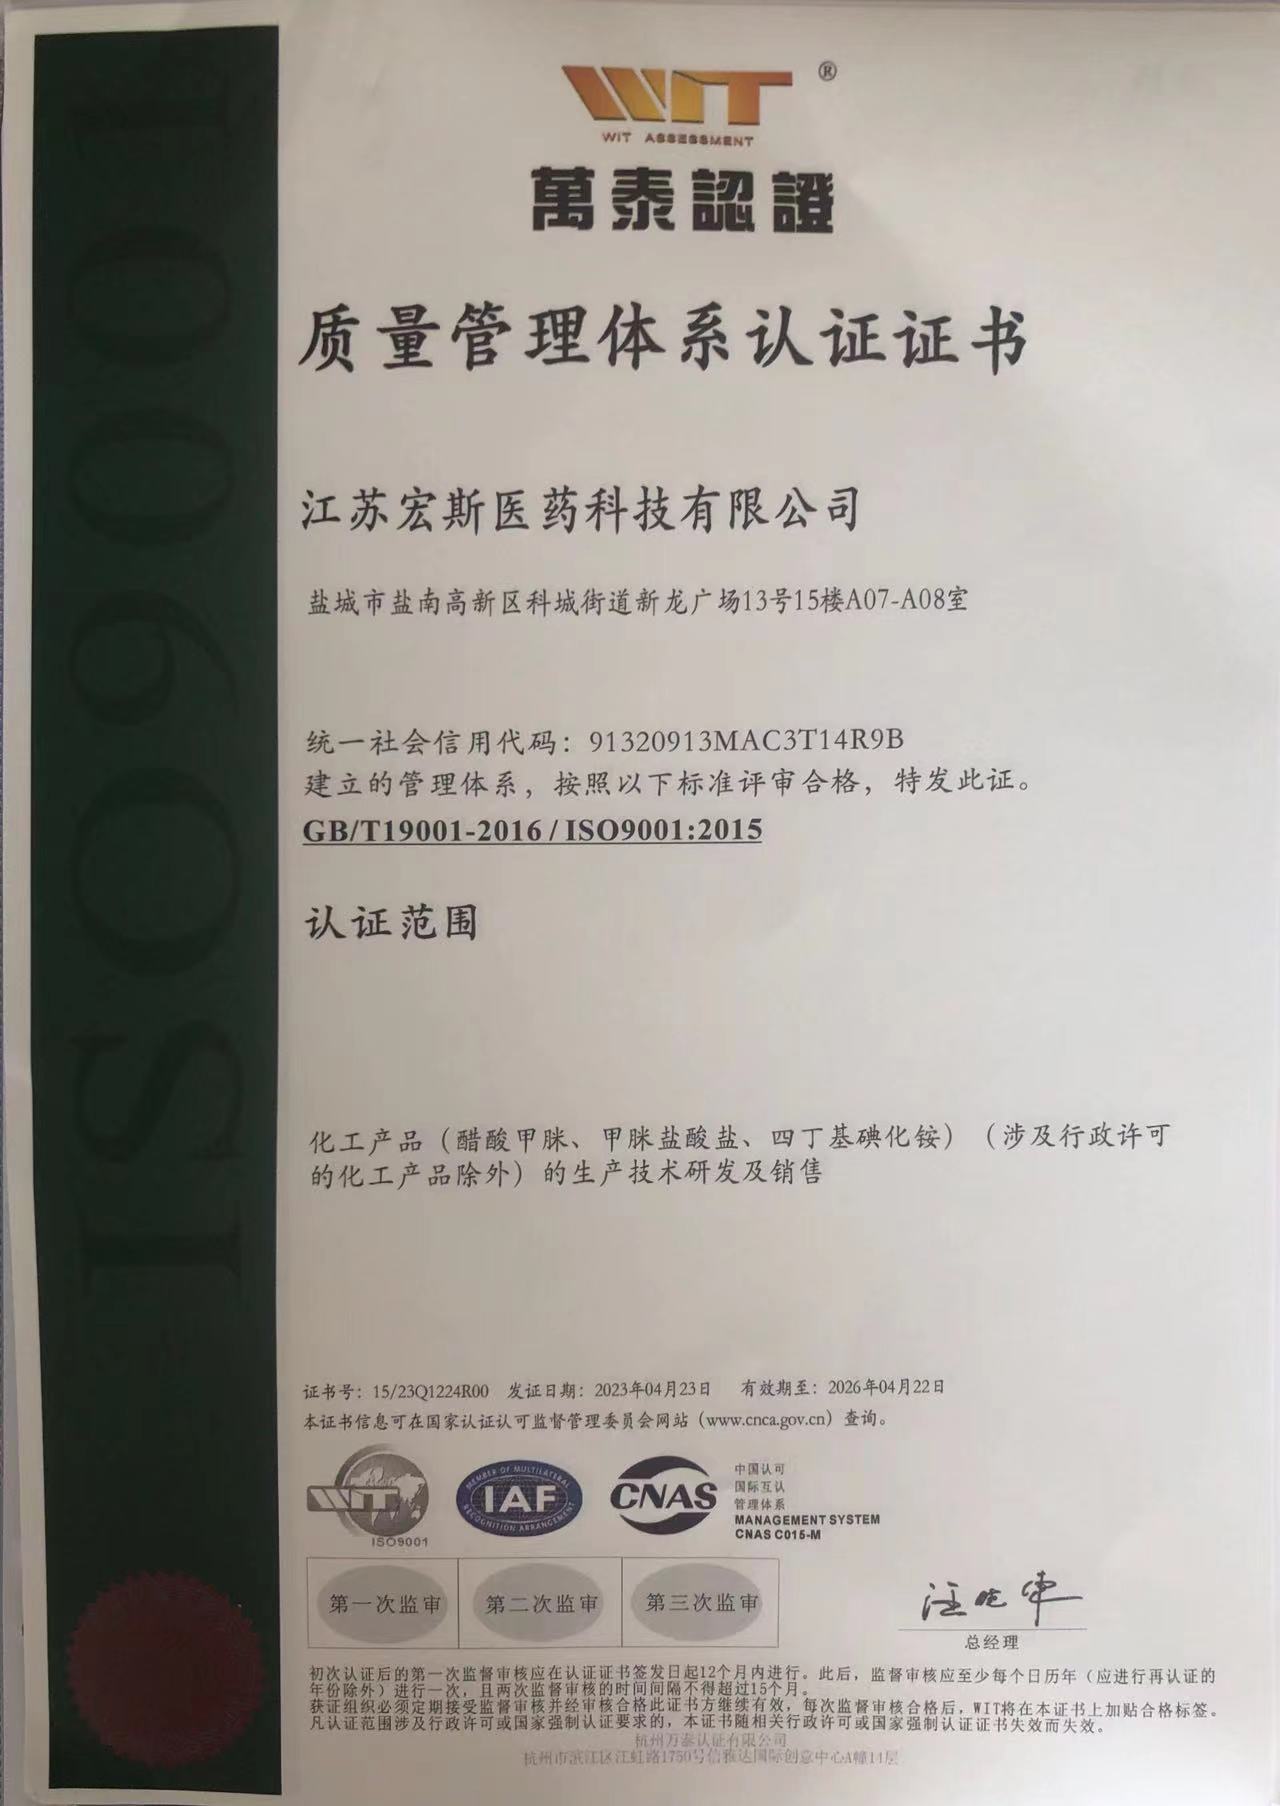 Warmly celebrate Jiangsu Hongsi Medical Technology Co., Ltd. successfully passed the ISO9001:2015 international quality system certification